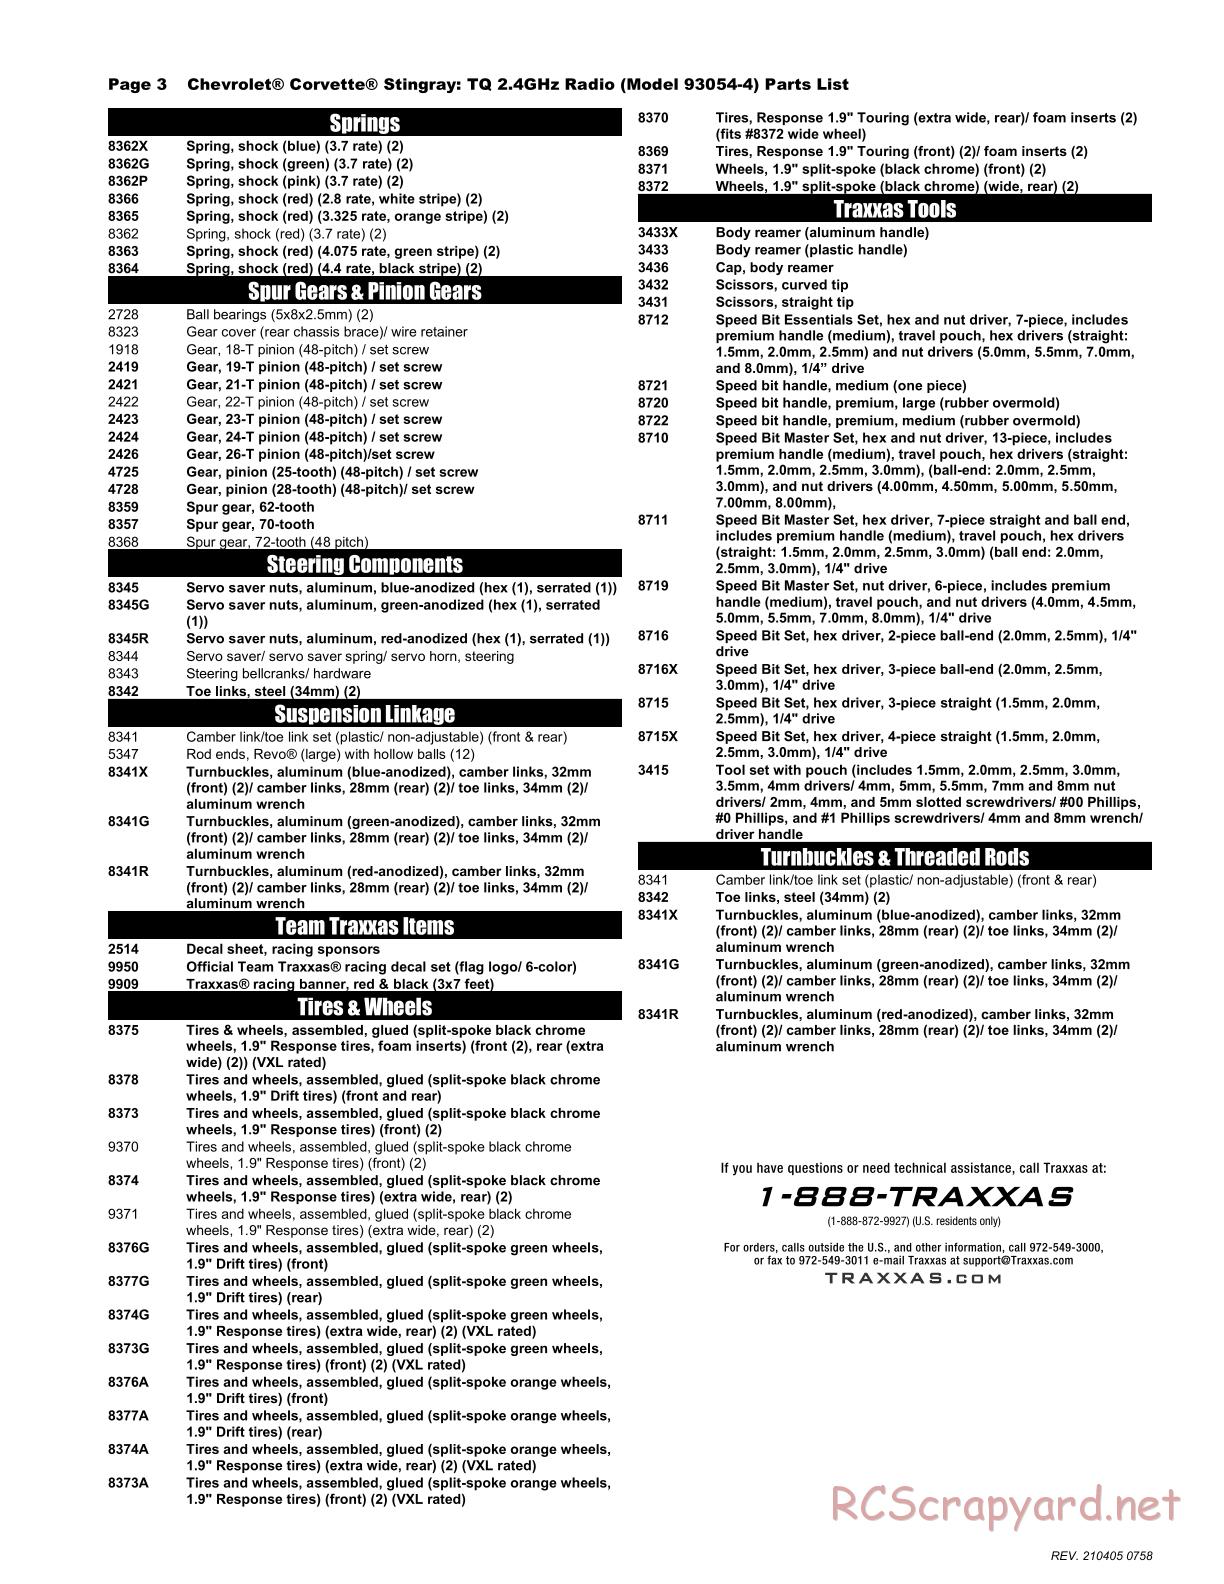 Traxxas - Corvette Stingray - Parts List - Page 3